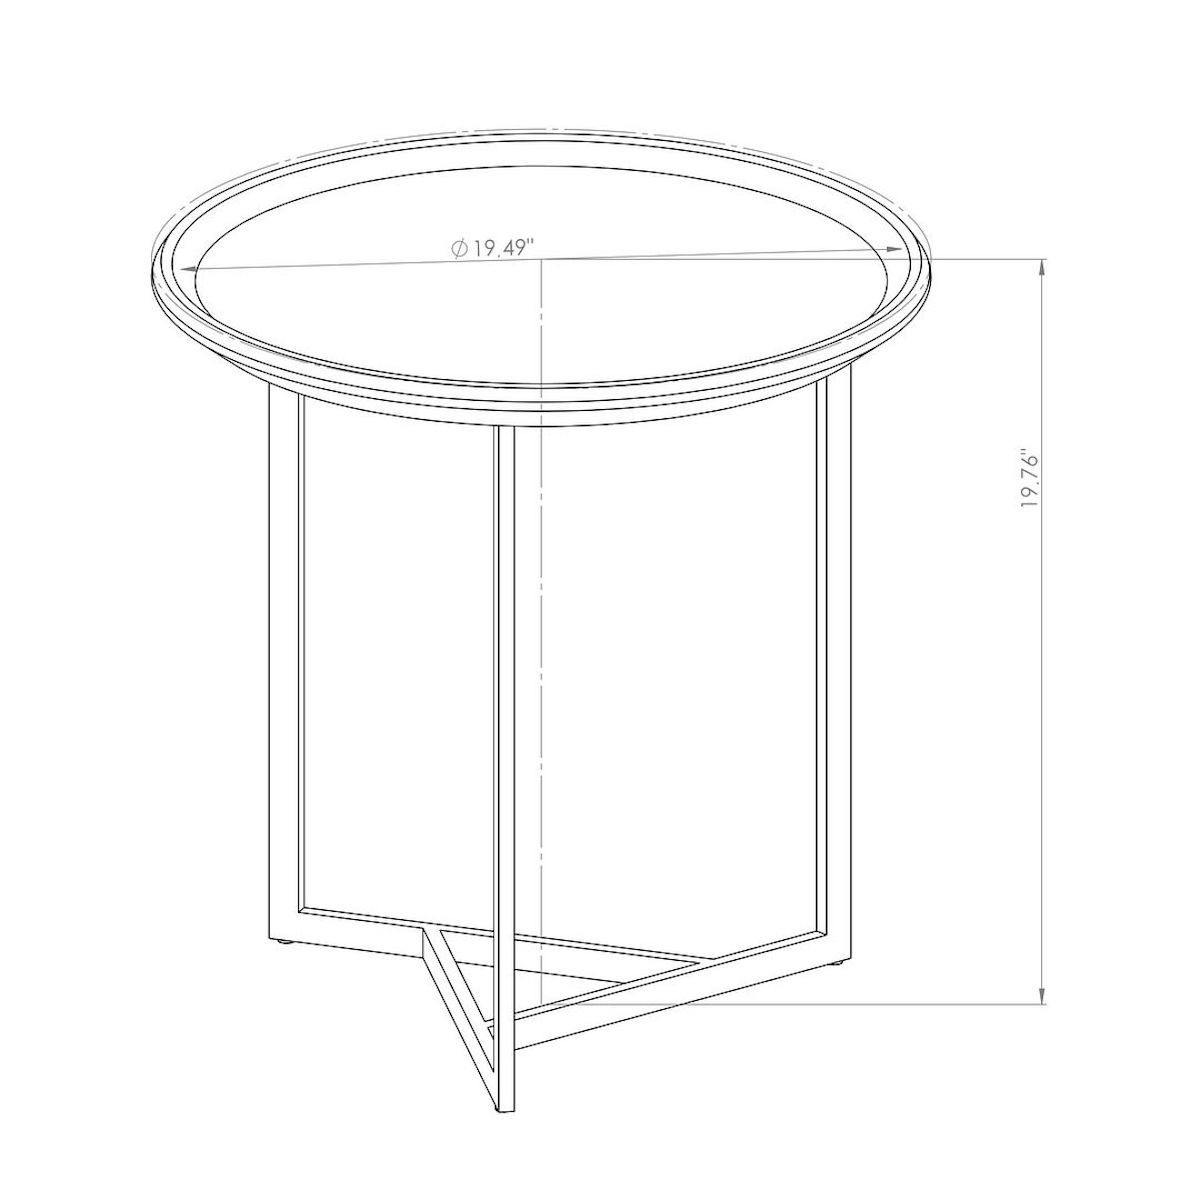 Manhattan Comfort Knickerbocker 19.29" Modern Round End Table with Steel Base in Cinnamon 254451 Dimensions